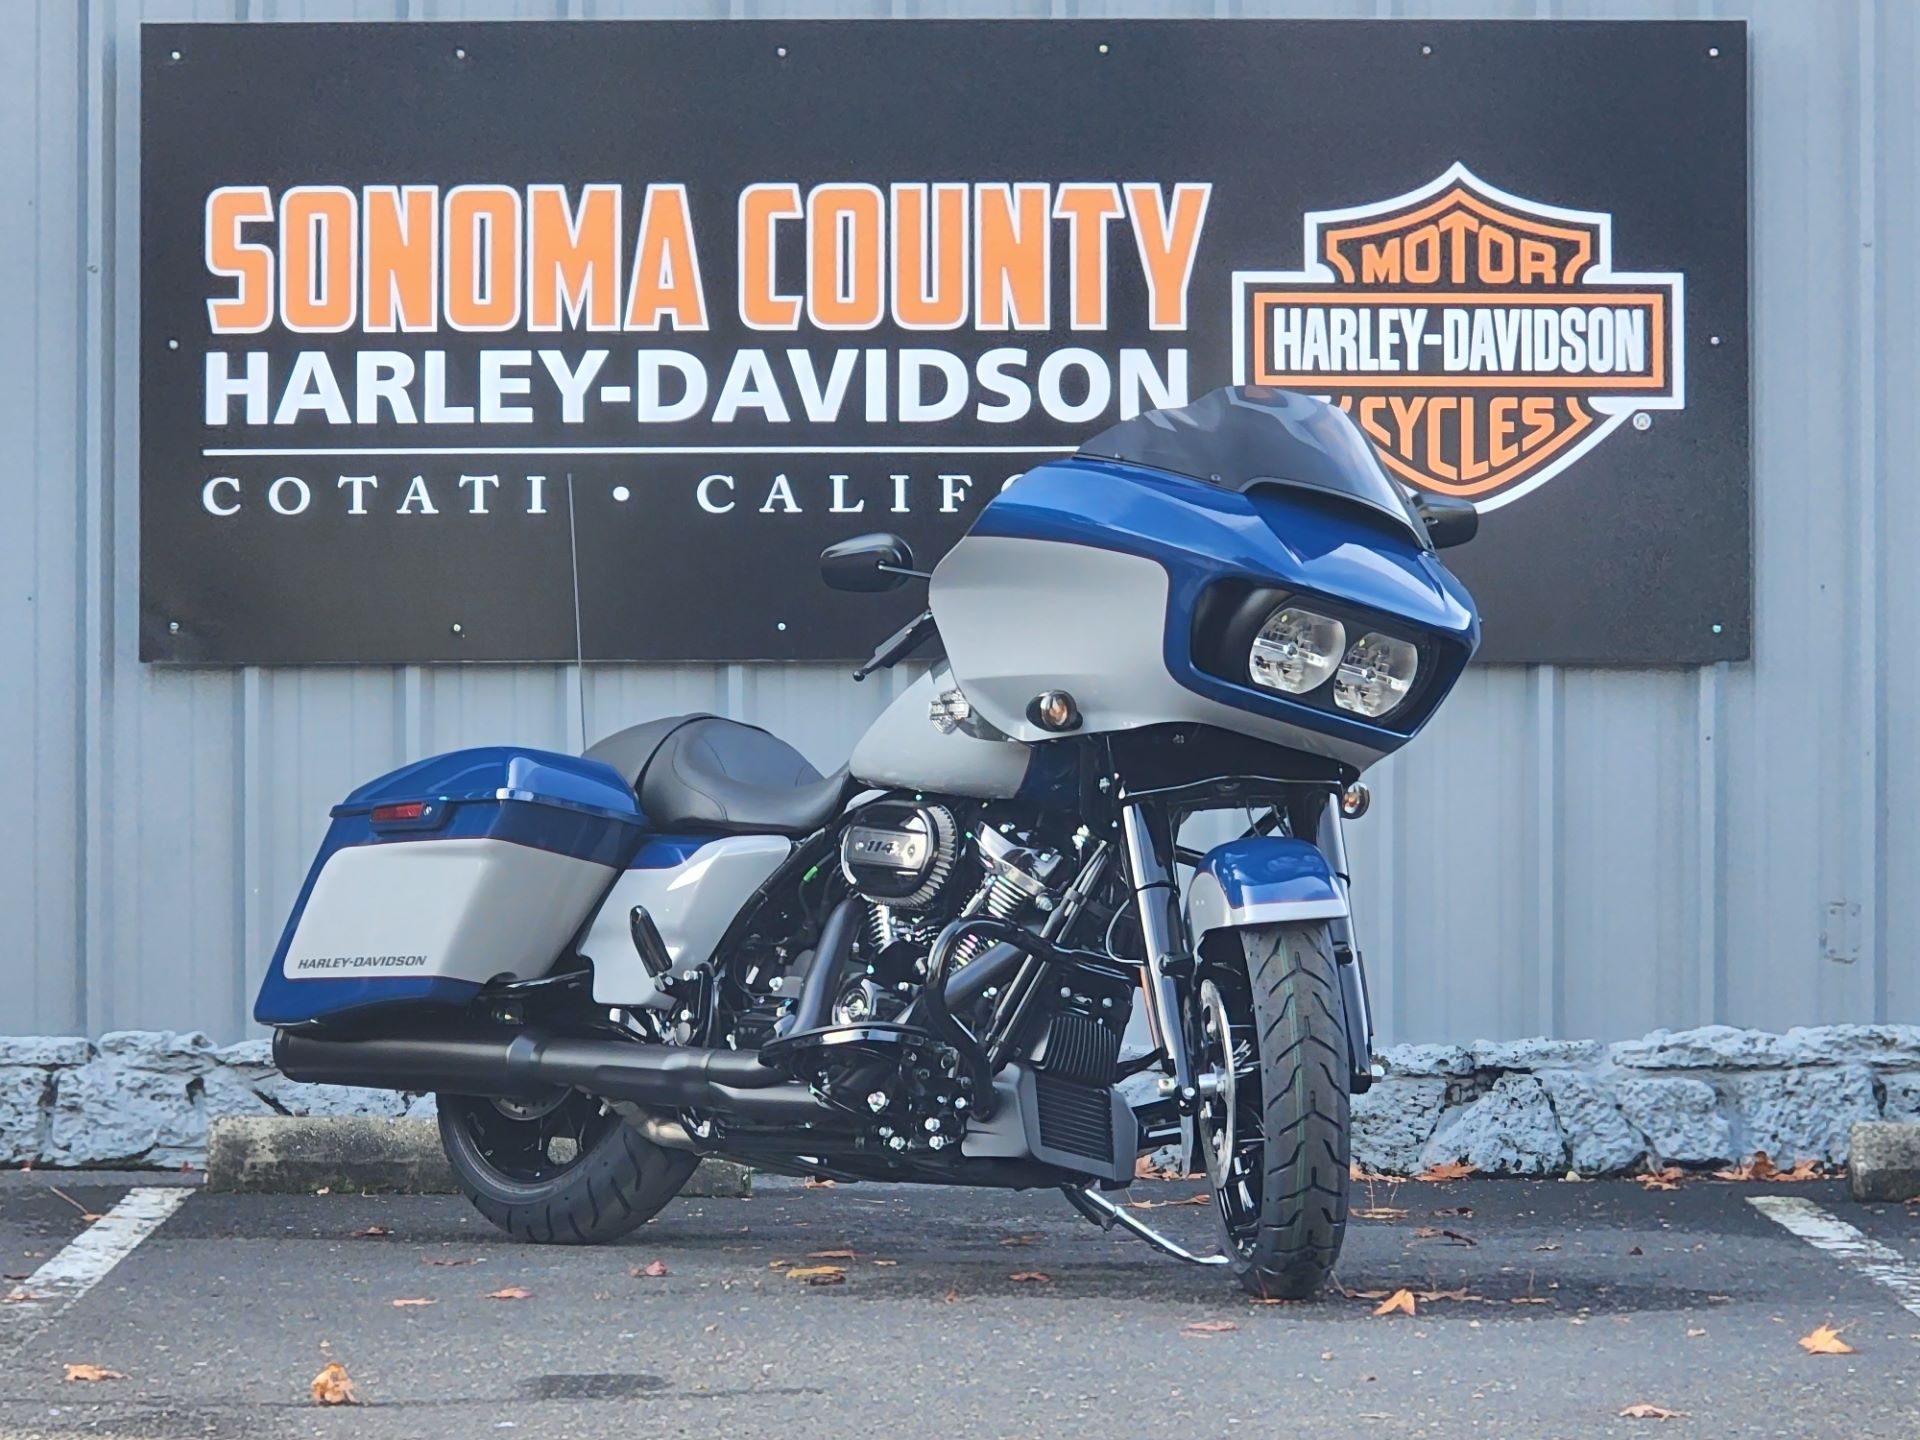 2023 Harley-Davidson Road Glide® Special in Cotati, California - Photo 2